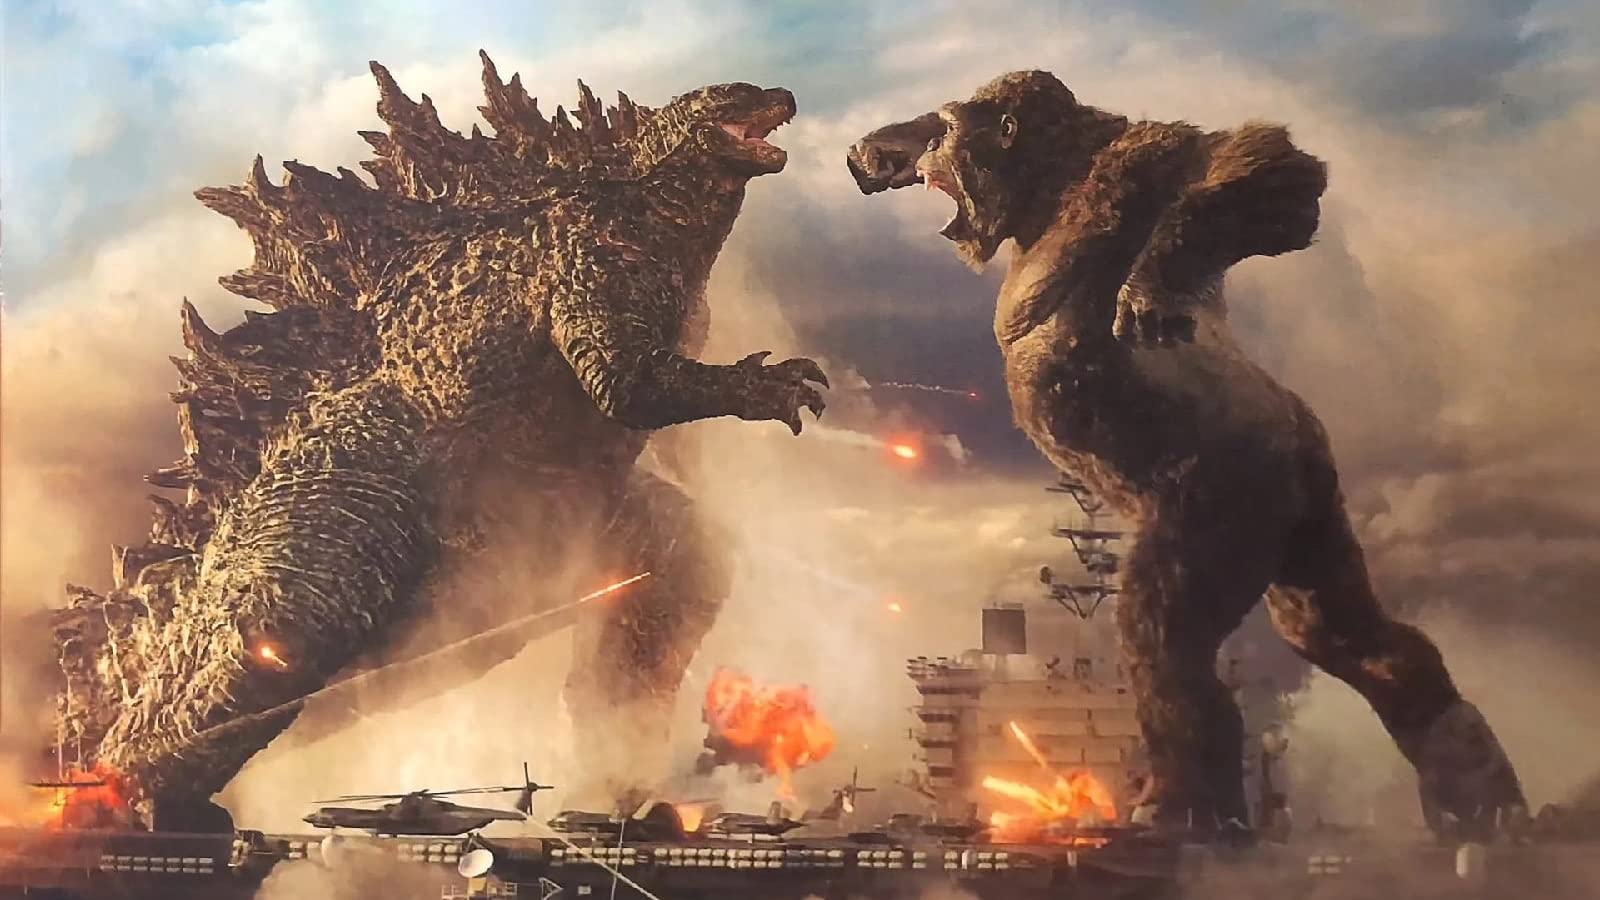 Cover Image Godzilla vs. Kong Warner Bros. Pictures